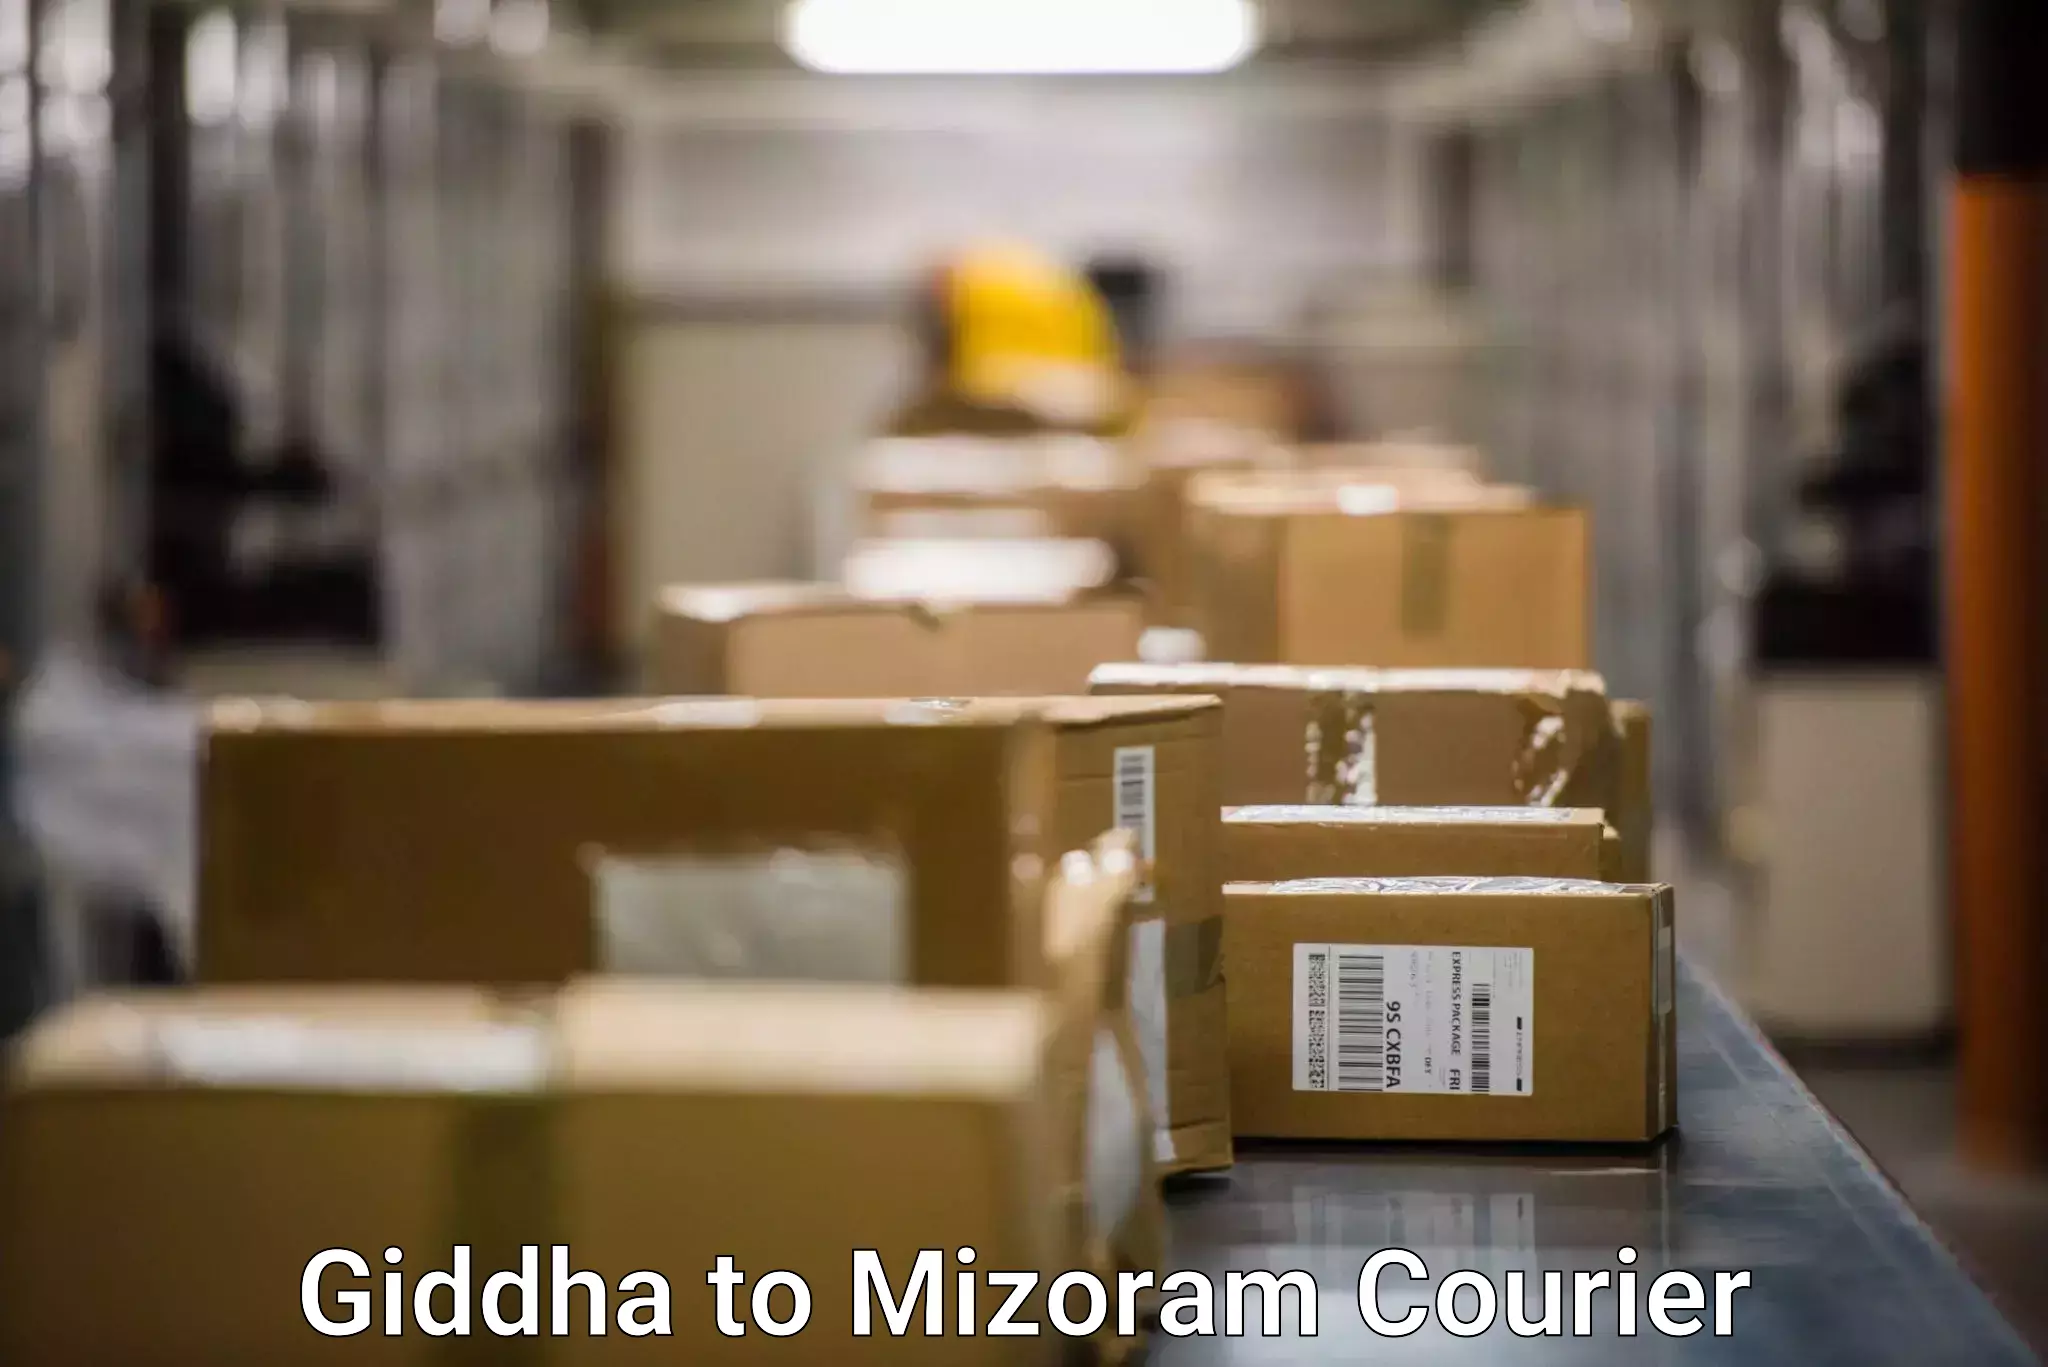 Enhanced tracking features Giddha to Mizoram